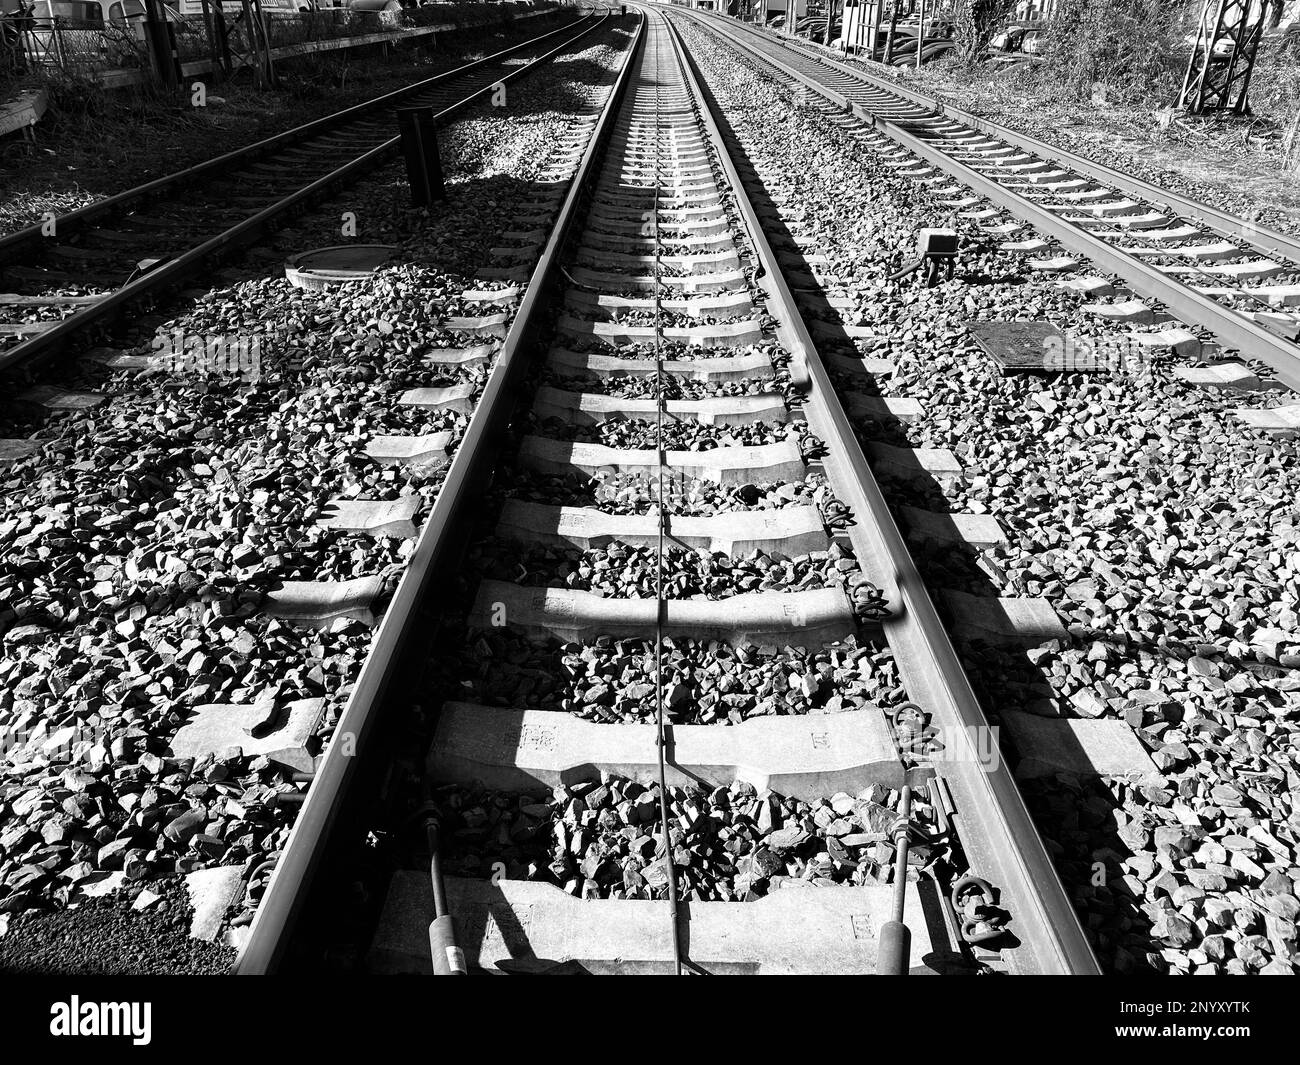 Bahngleise in Schwarzweiß fotografiert Stockfoto